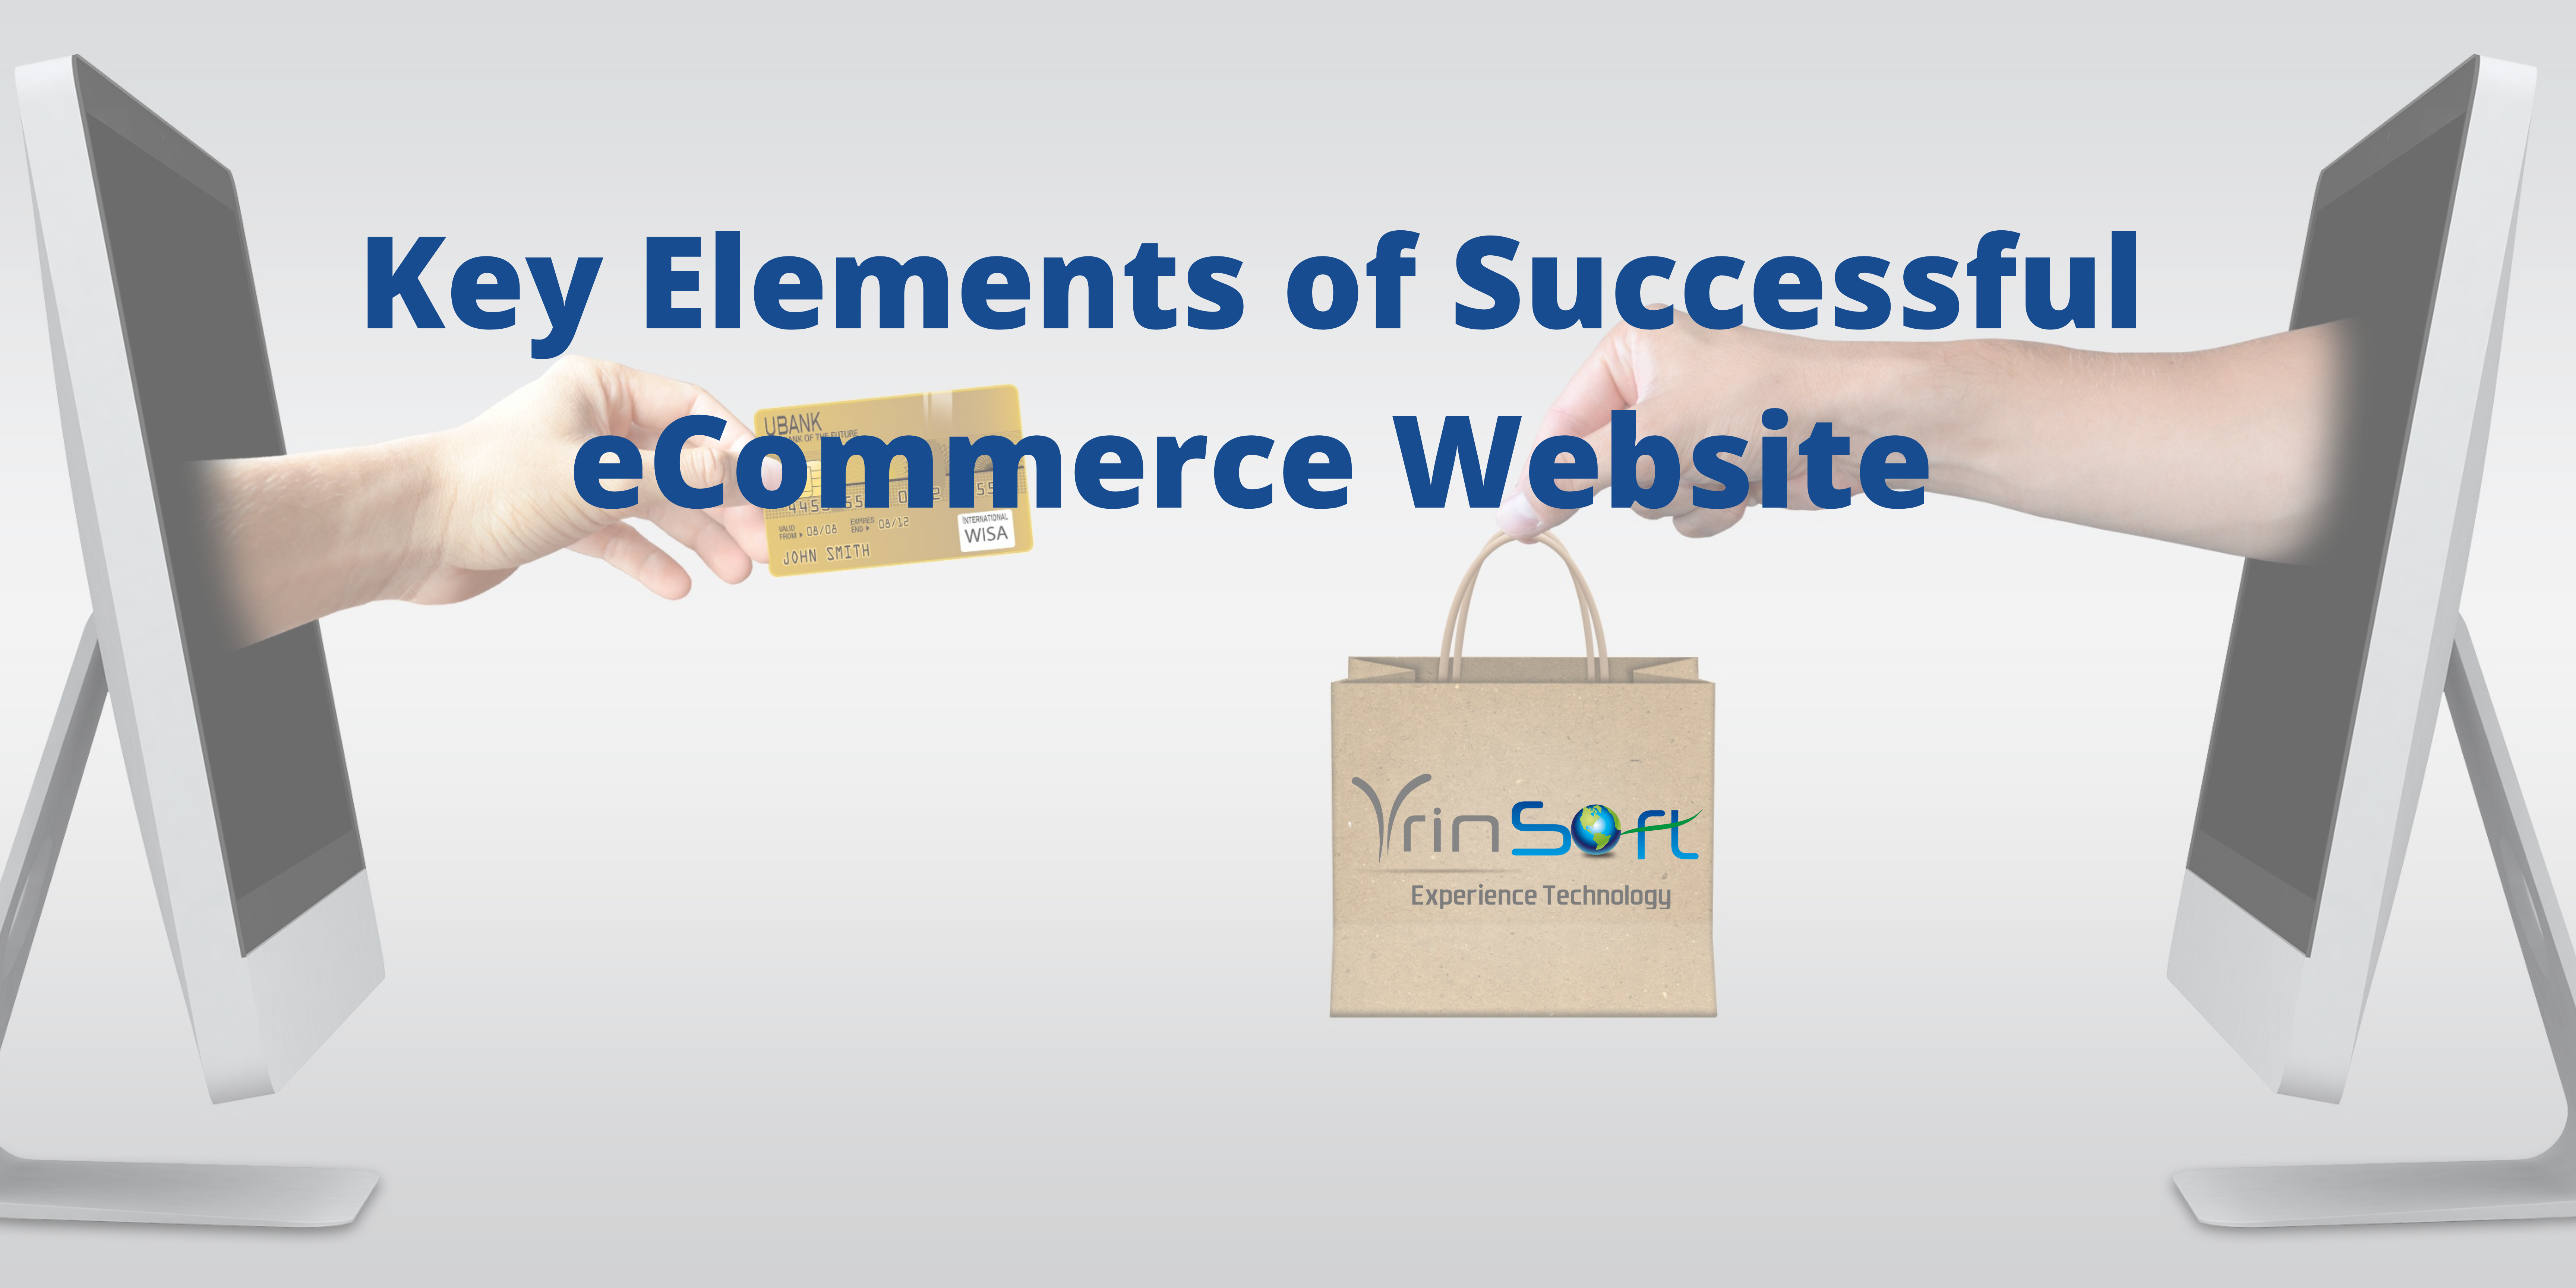 Key Elements of Successful eCommerce Website